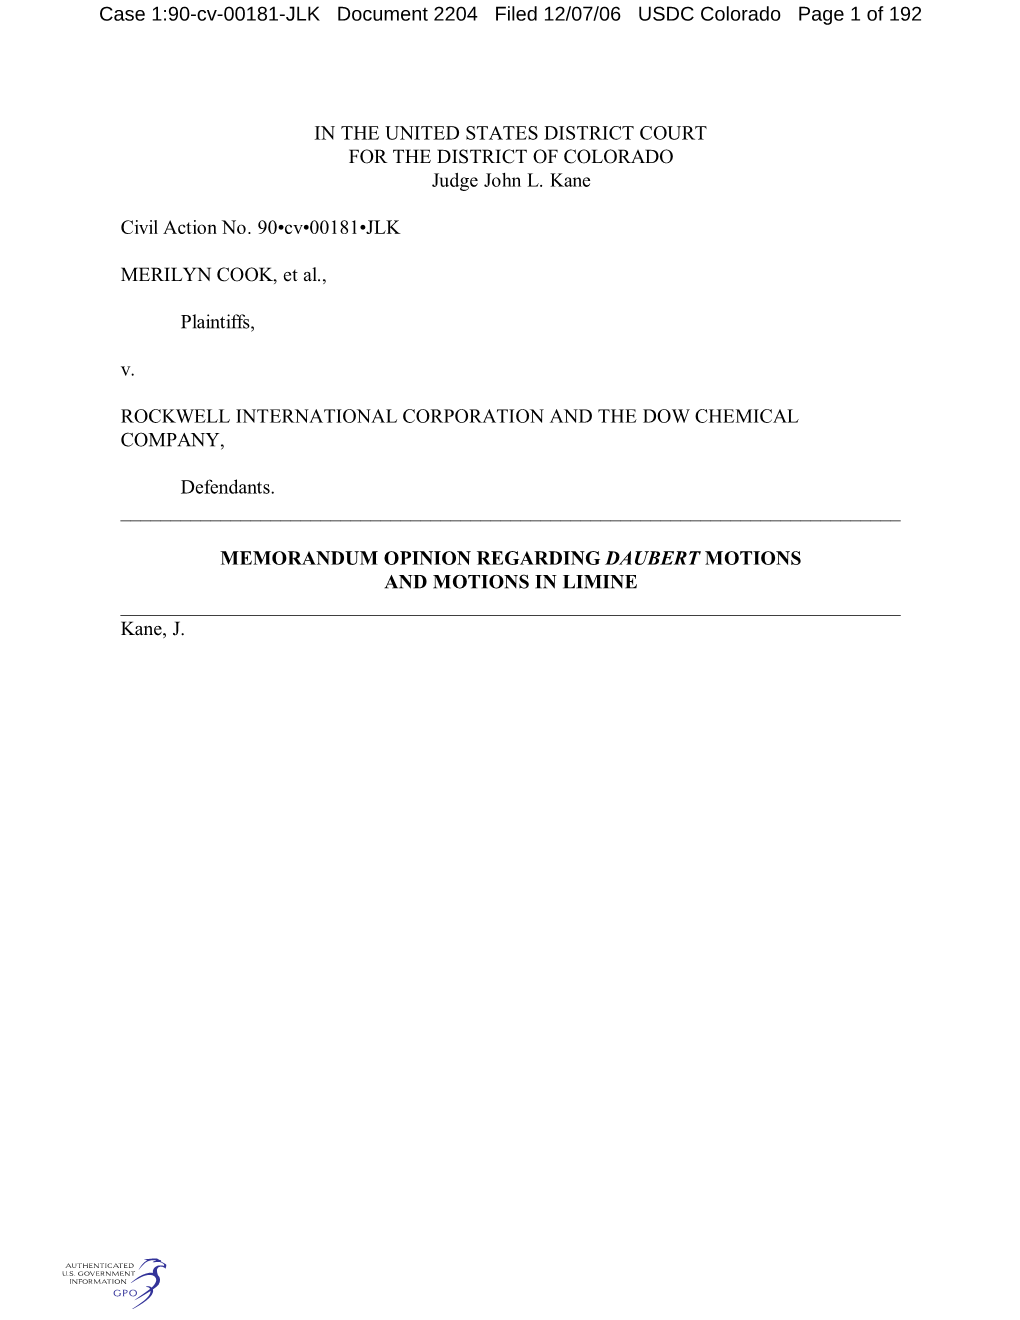 Case 1:90-Cv-00181-JLK Document 2204 Filed 12/07/06 USDC Colorado Page 1 of 192